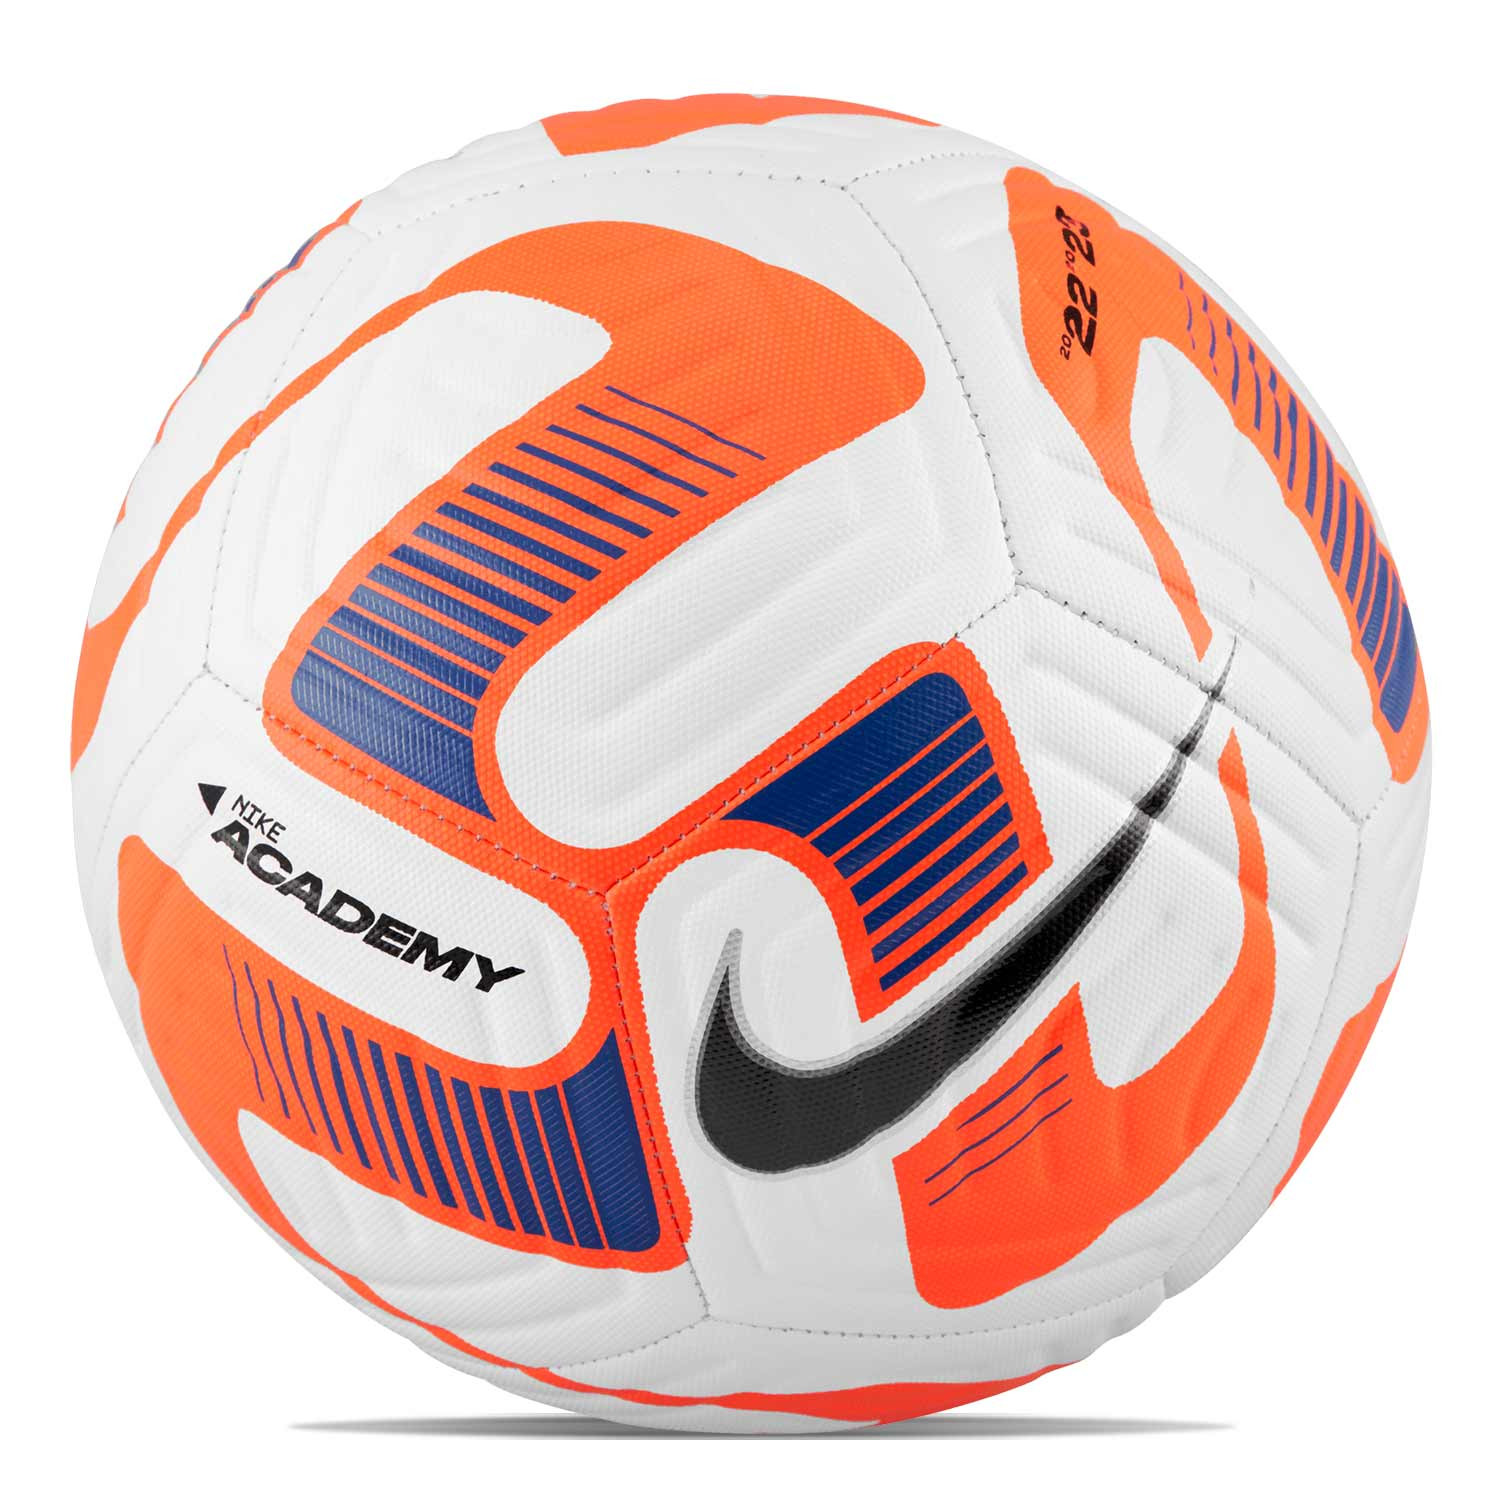 Balón Nike Academy 4 blanco y naranja | futbolmania